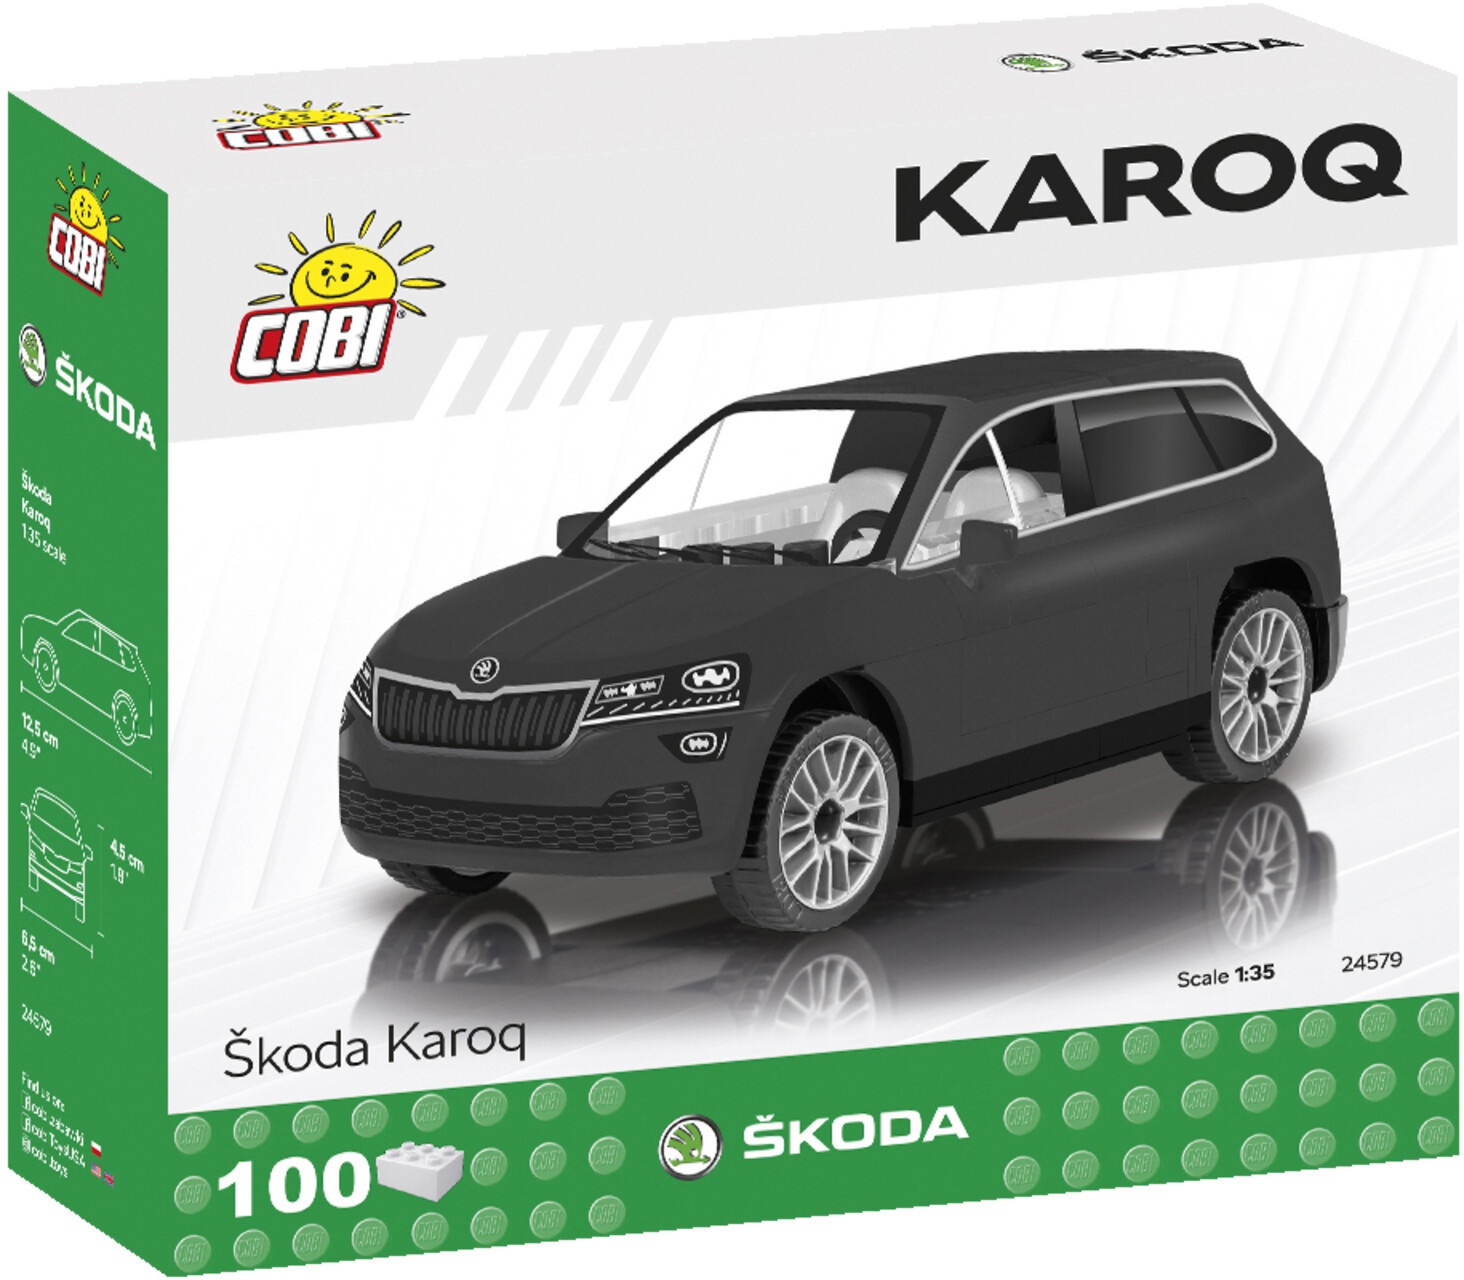 Cobi Škoda Karoq (24579) ab 12,99 €